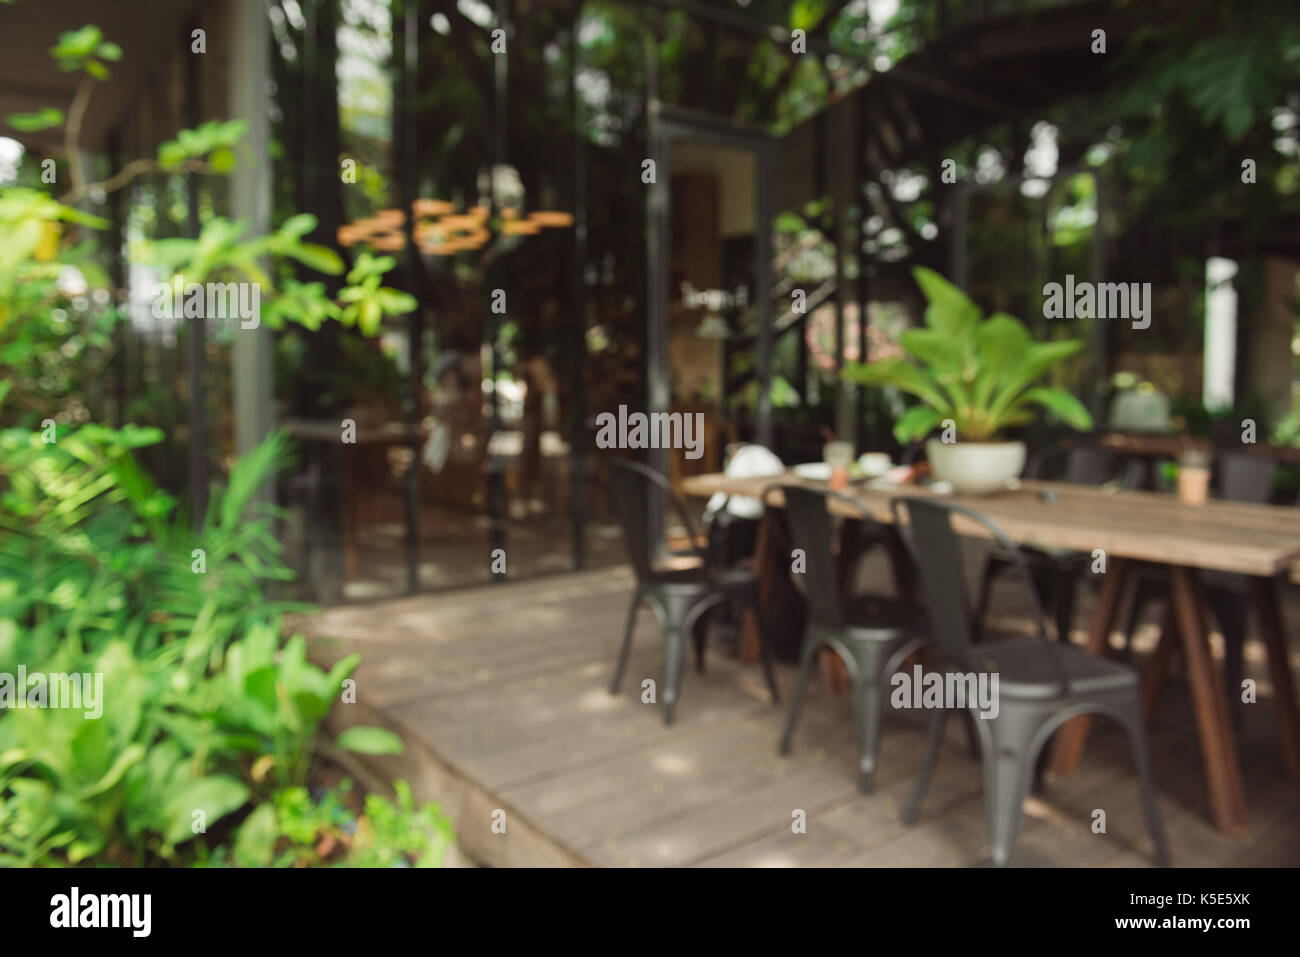 Abstract blur coffee shop. Mobilier et décoration in cafe Banque D'Images